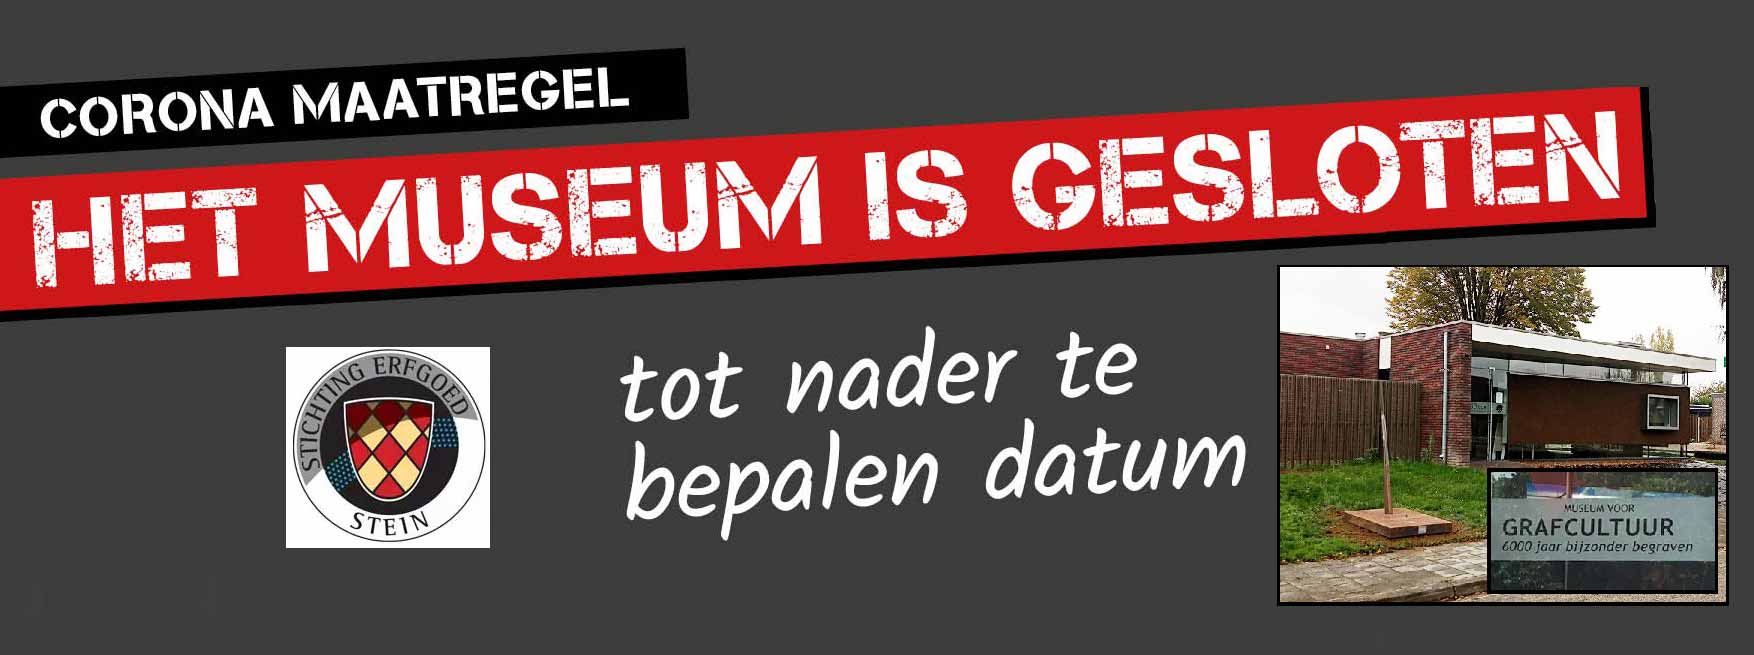 Stein museum gesloten